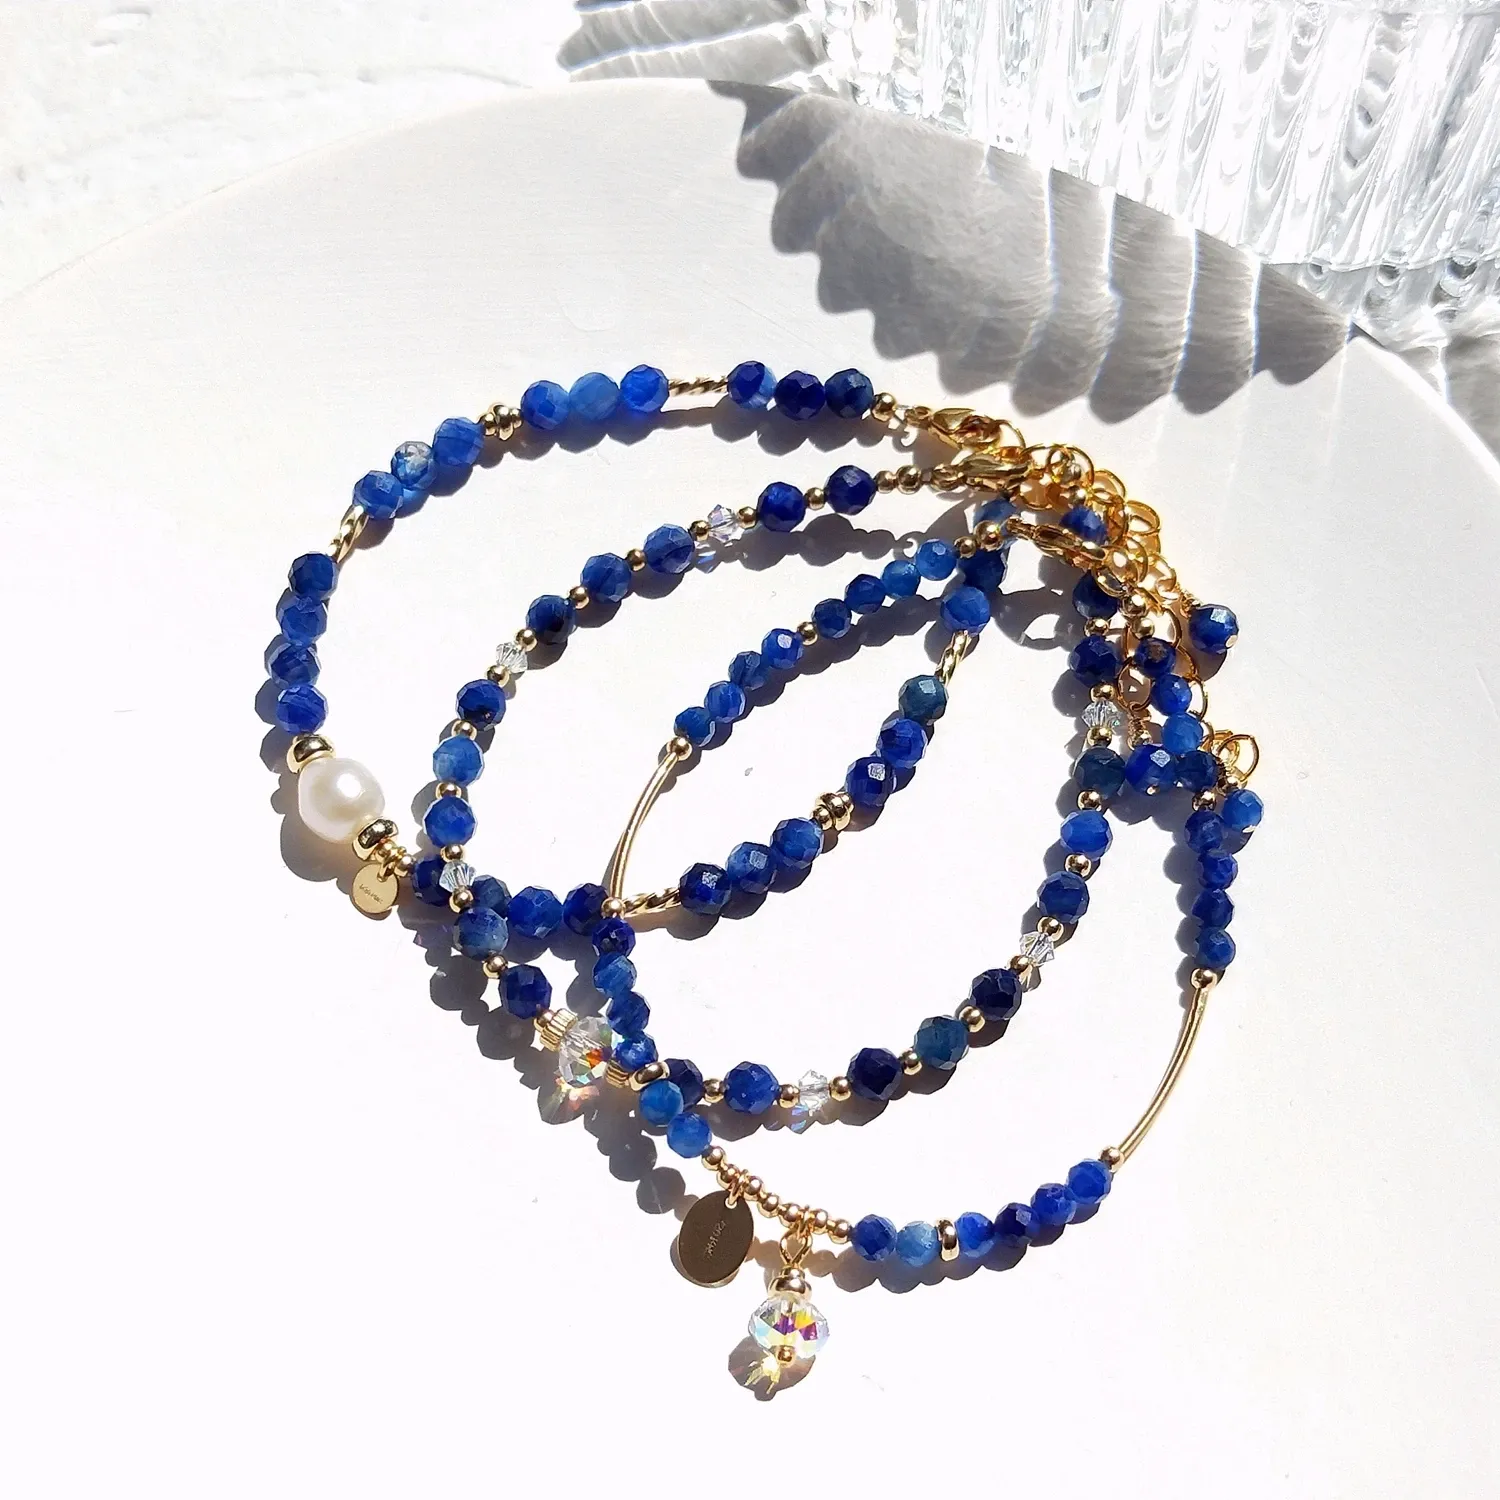 Bangles Li Ji Kyanite 14K Gold Filled Bracelet Natural Blue Stone Sparkling Charm Jewelry For Gift